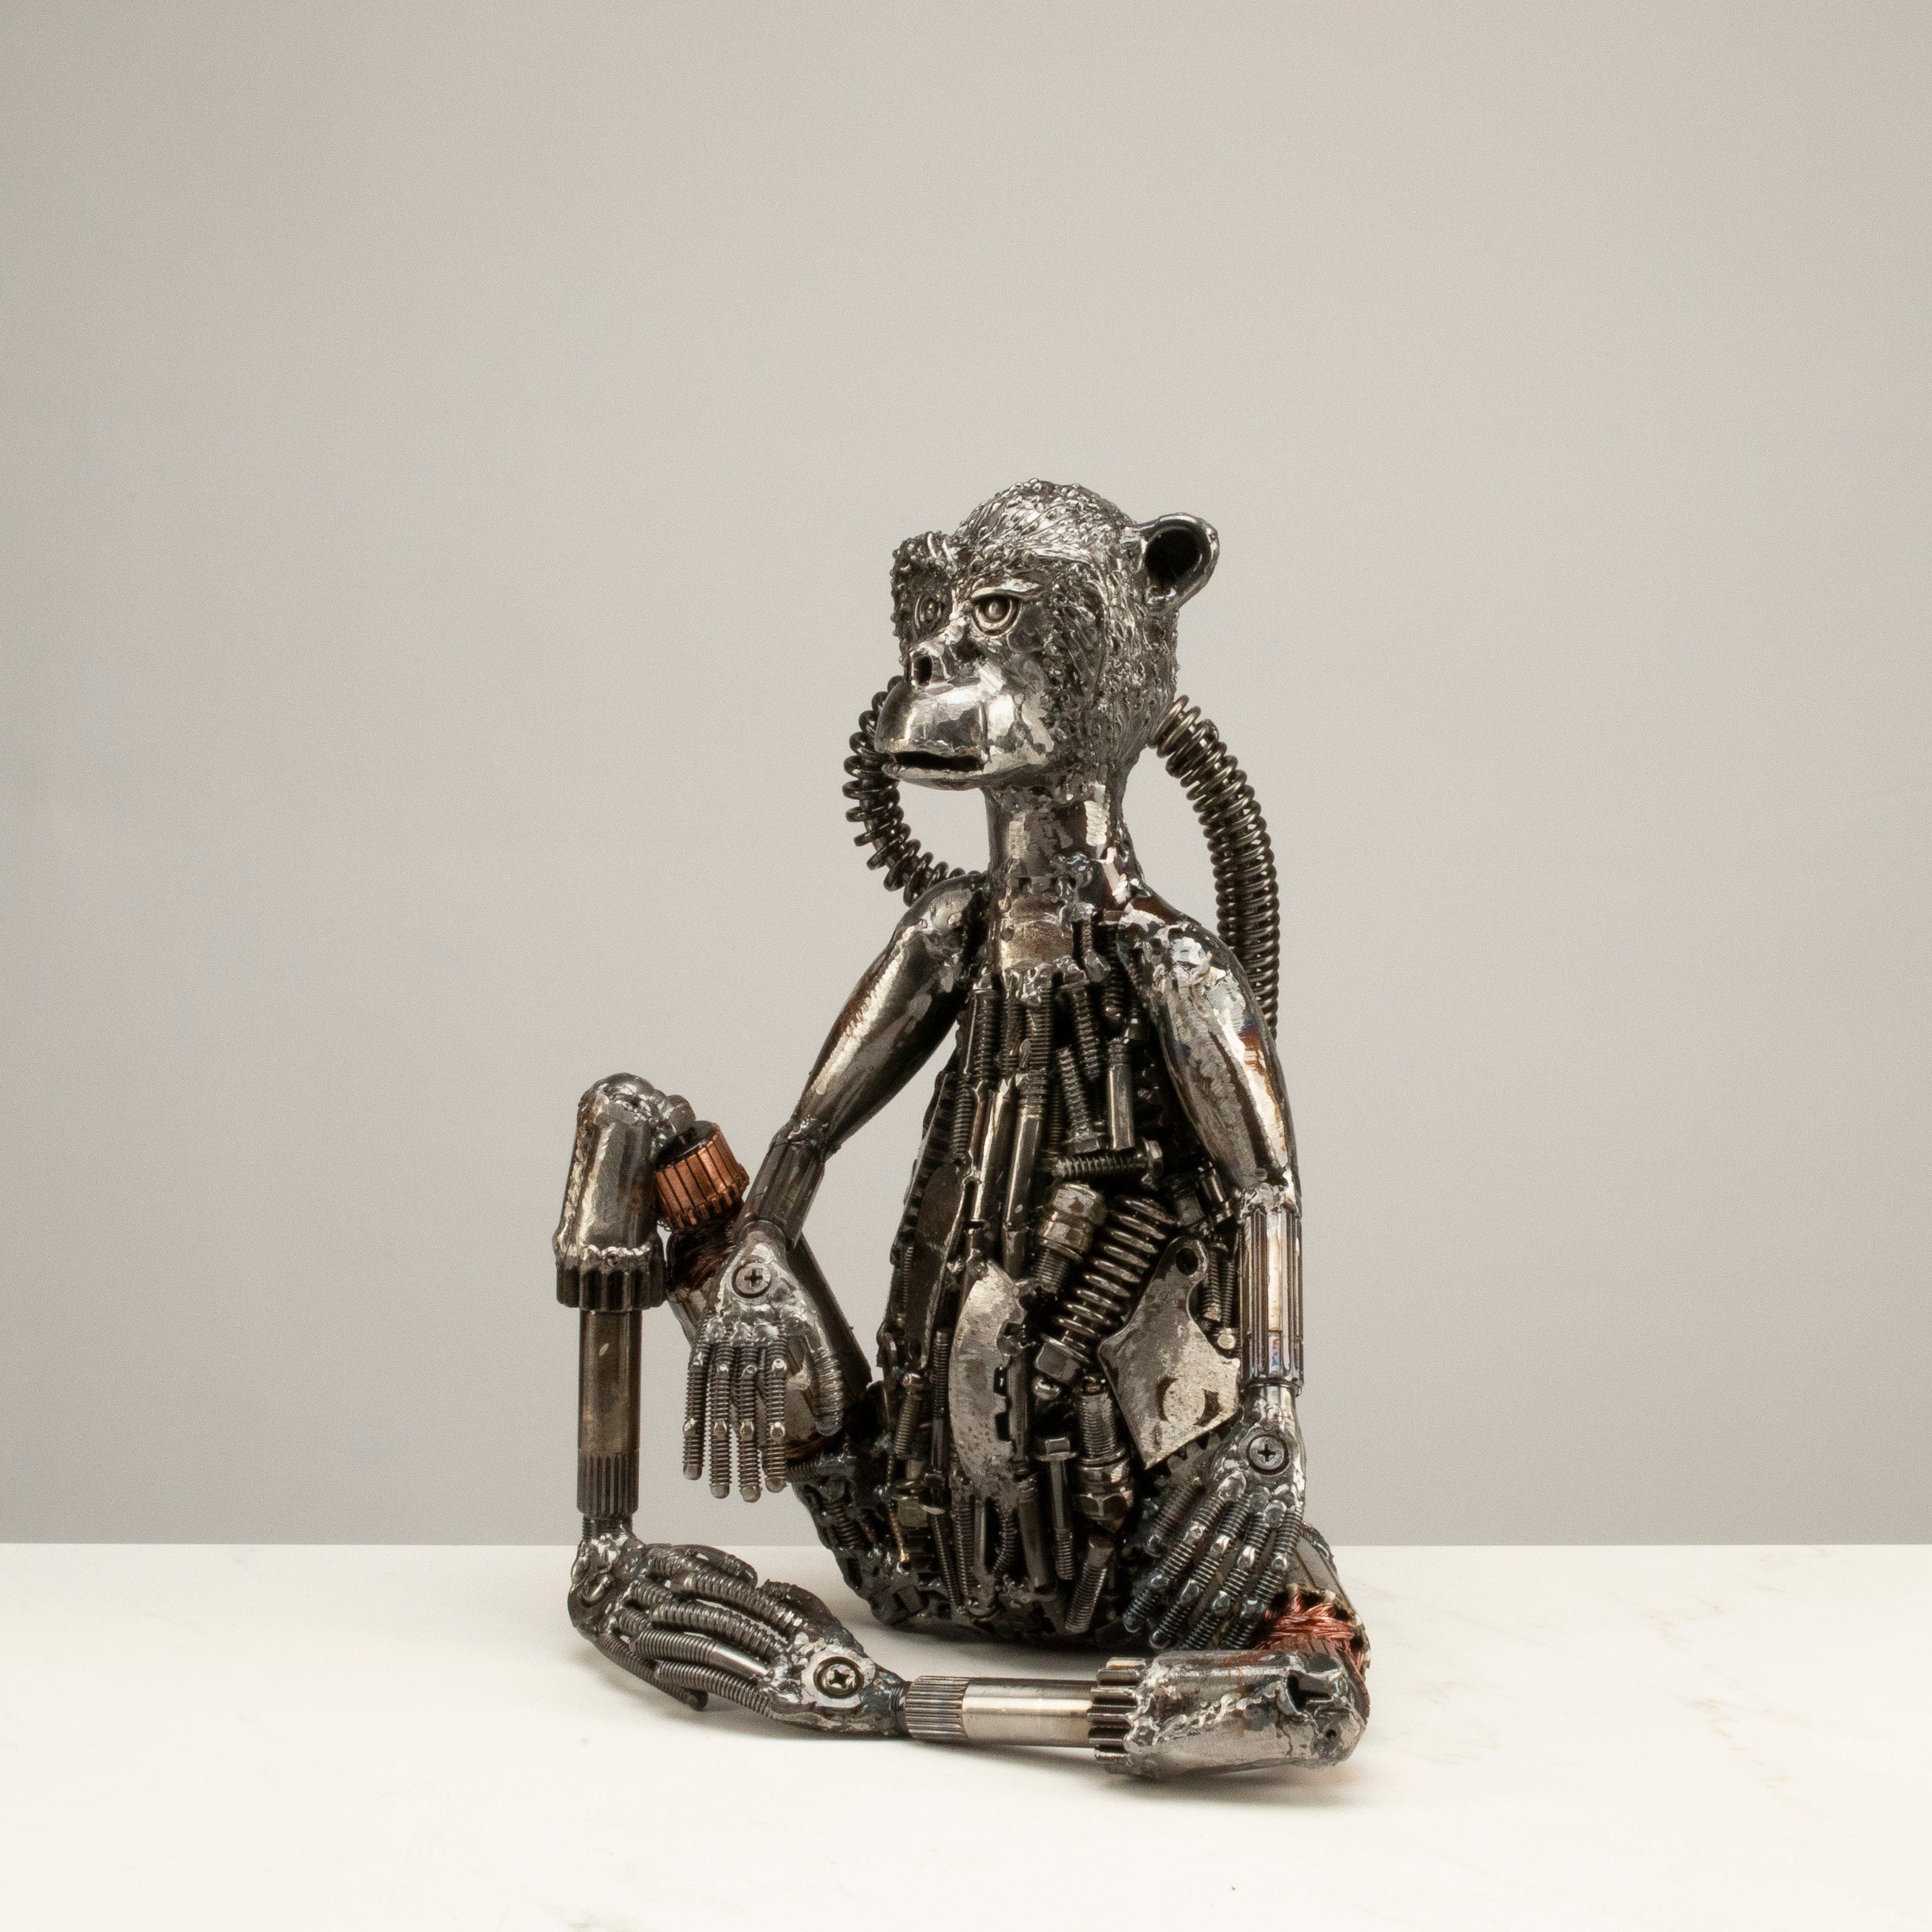 KALIFANO Recycled Metal Art Sitting Monkey Recycled Metal Art Sculpture RMS-1700MON-PK